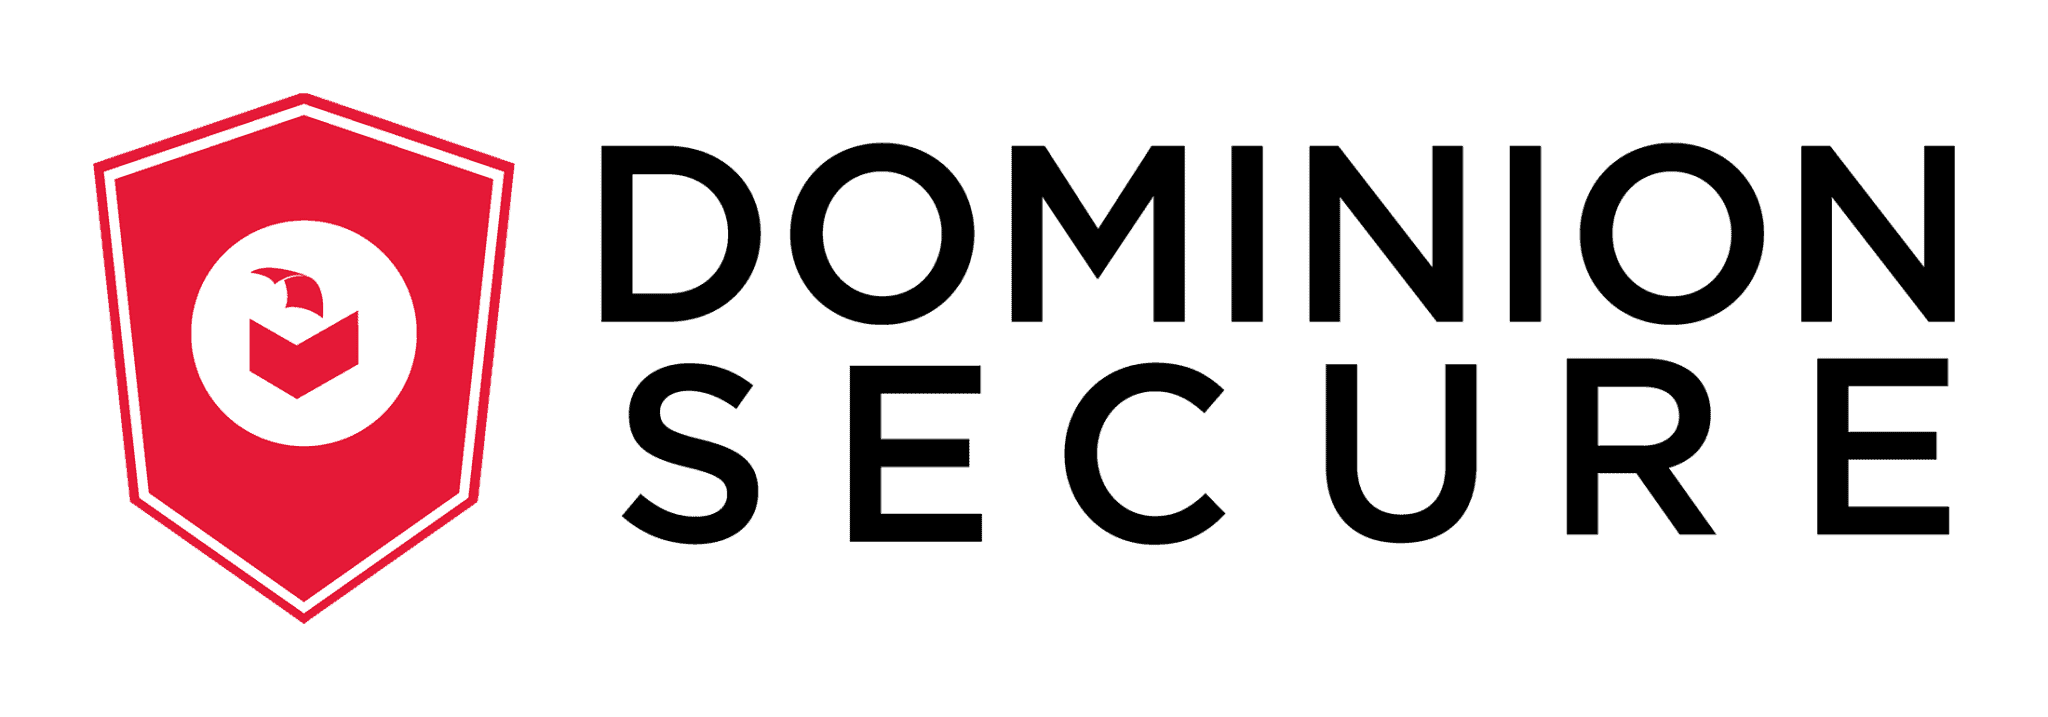 2016 dominion voting imagecast ev